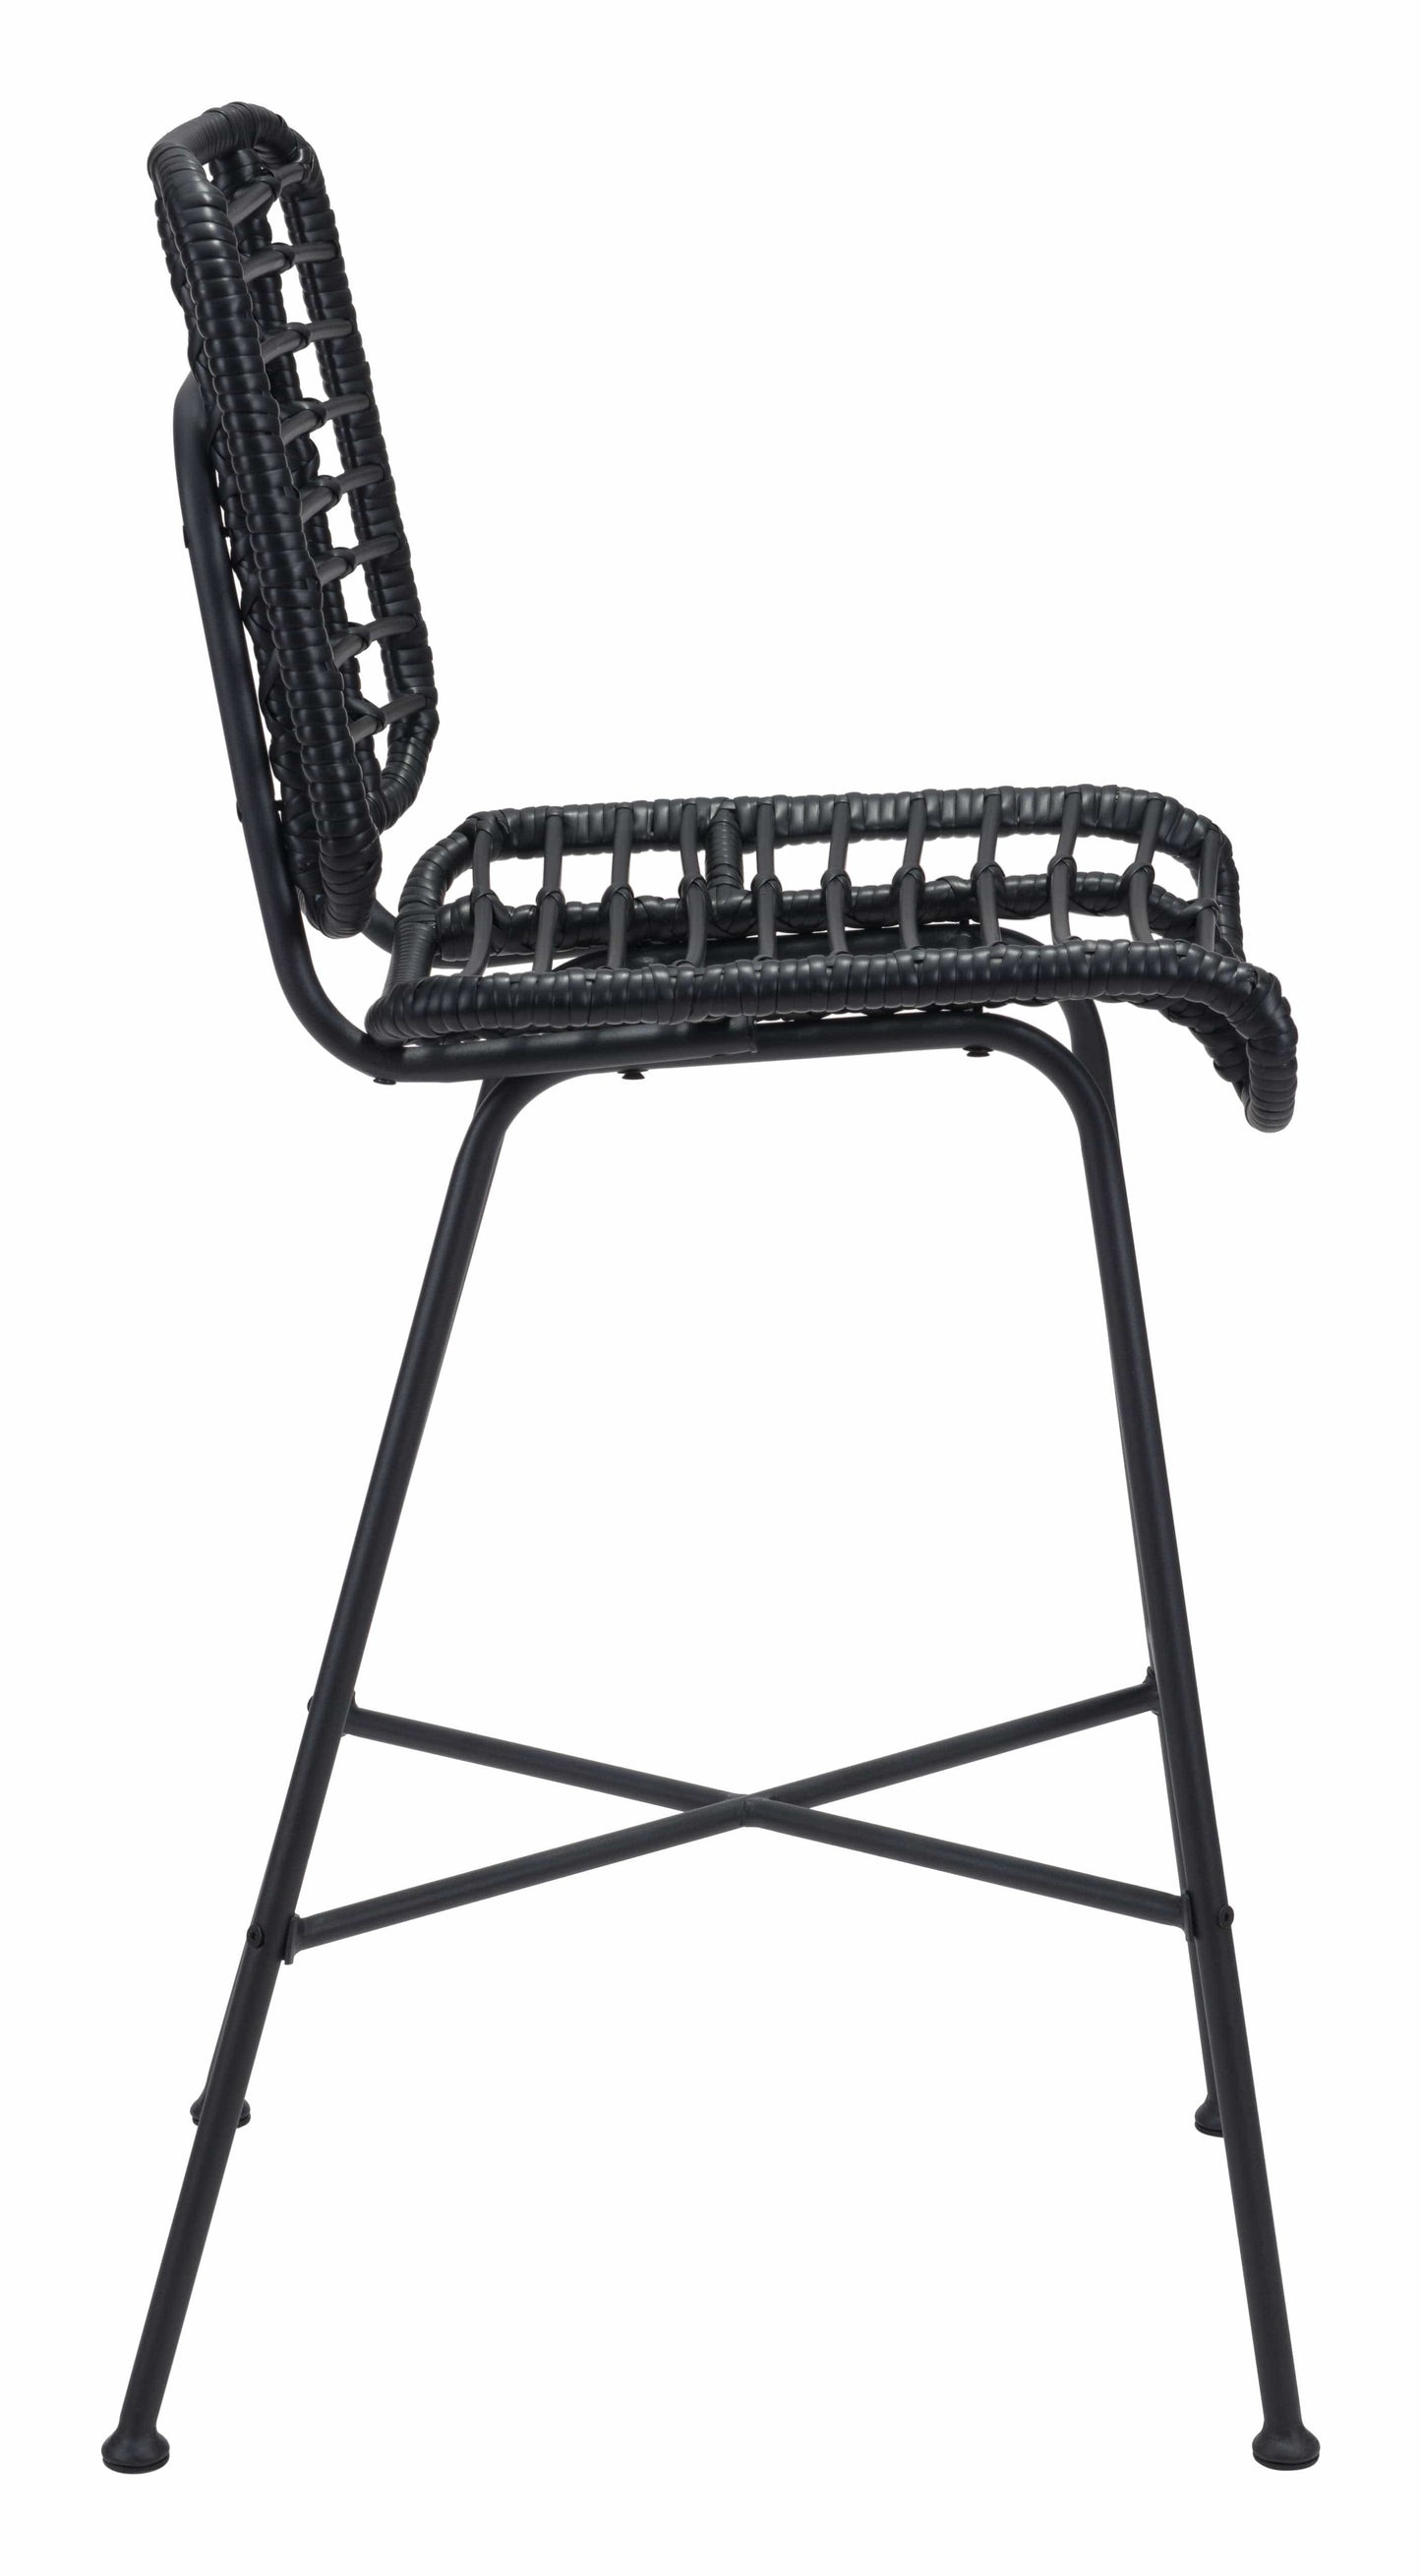 250 lbs weight capacity bar chair